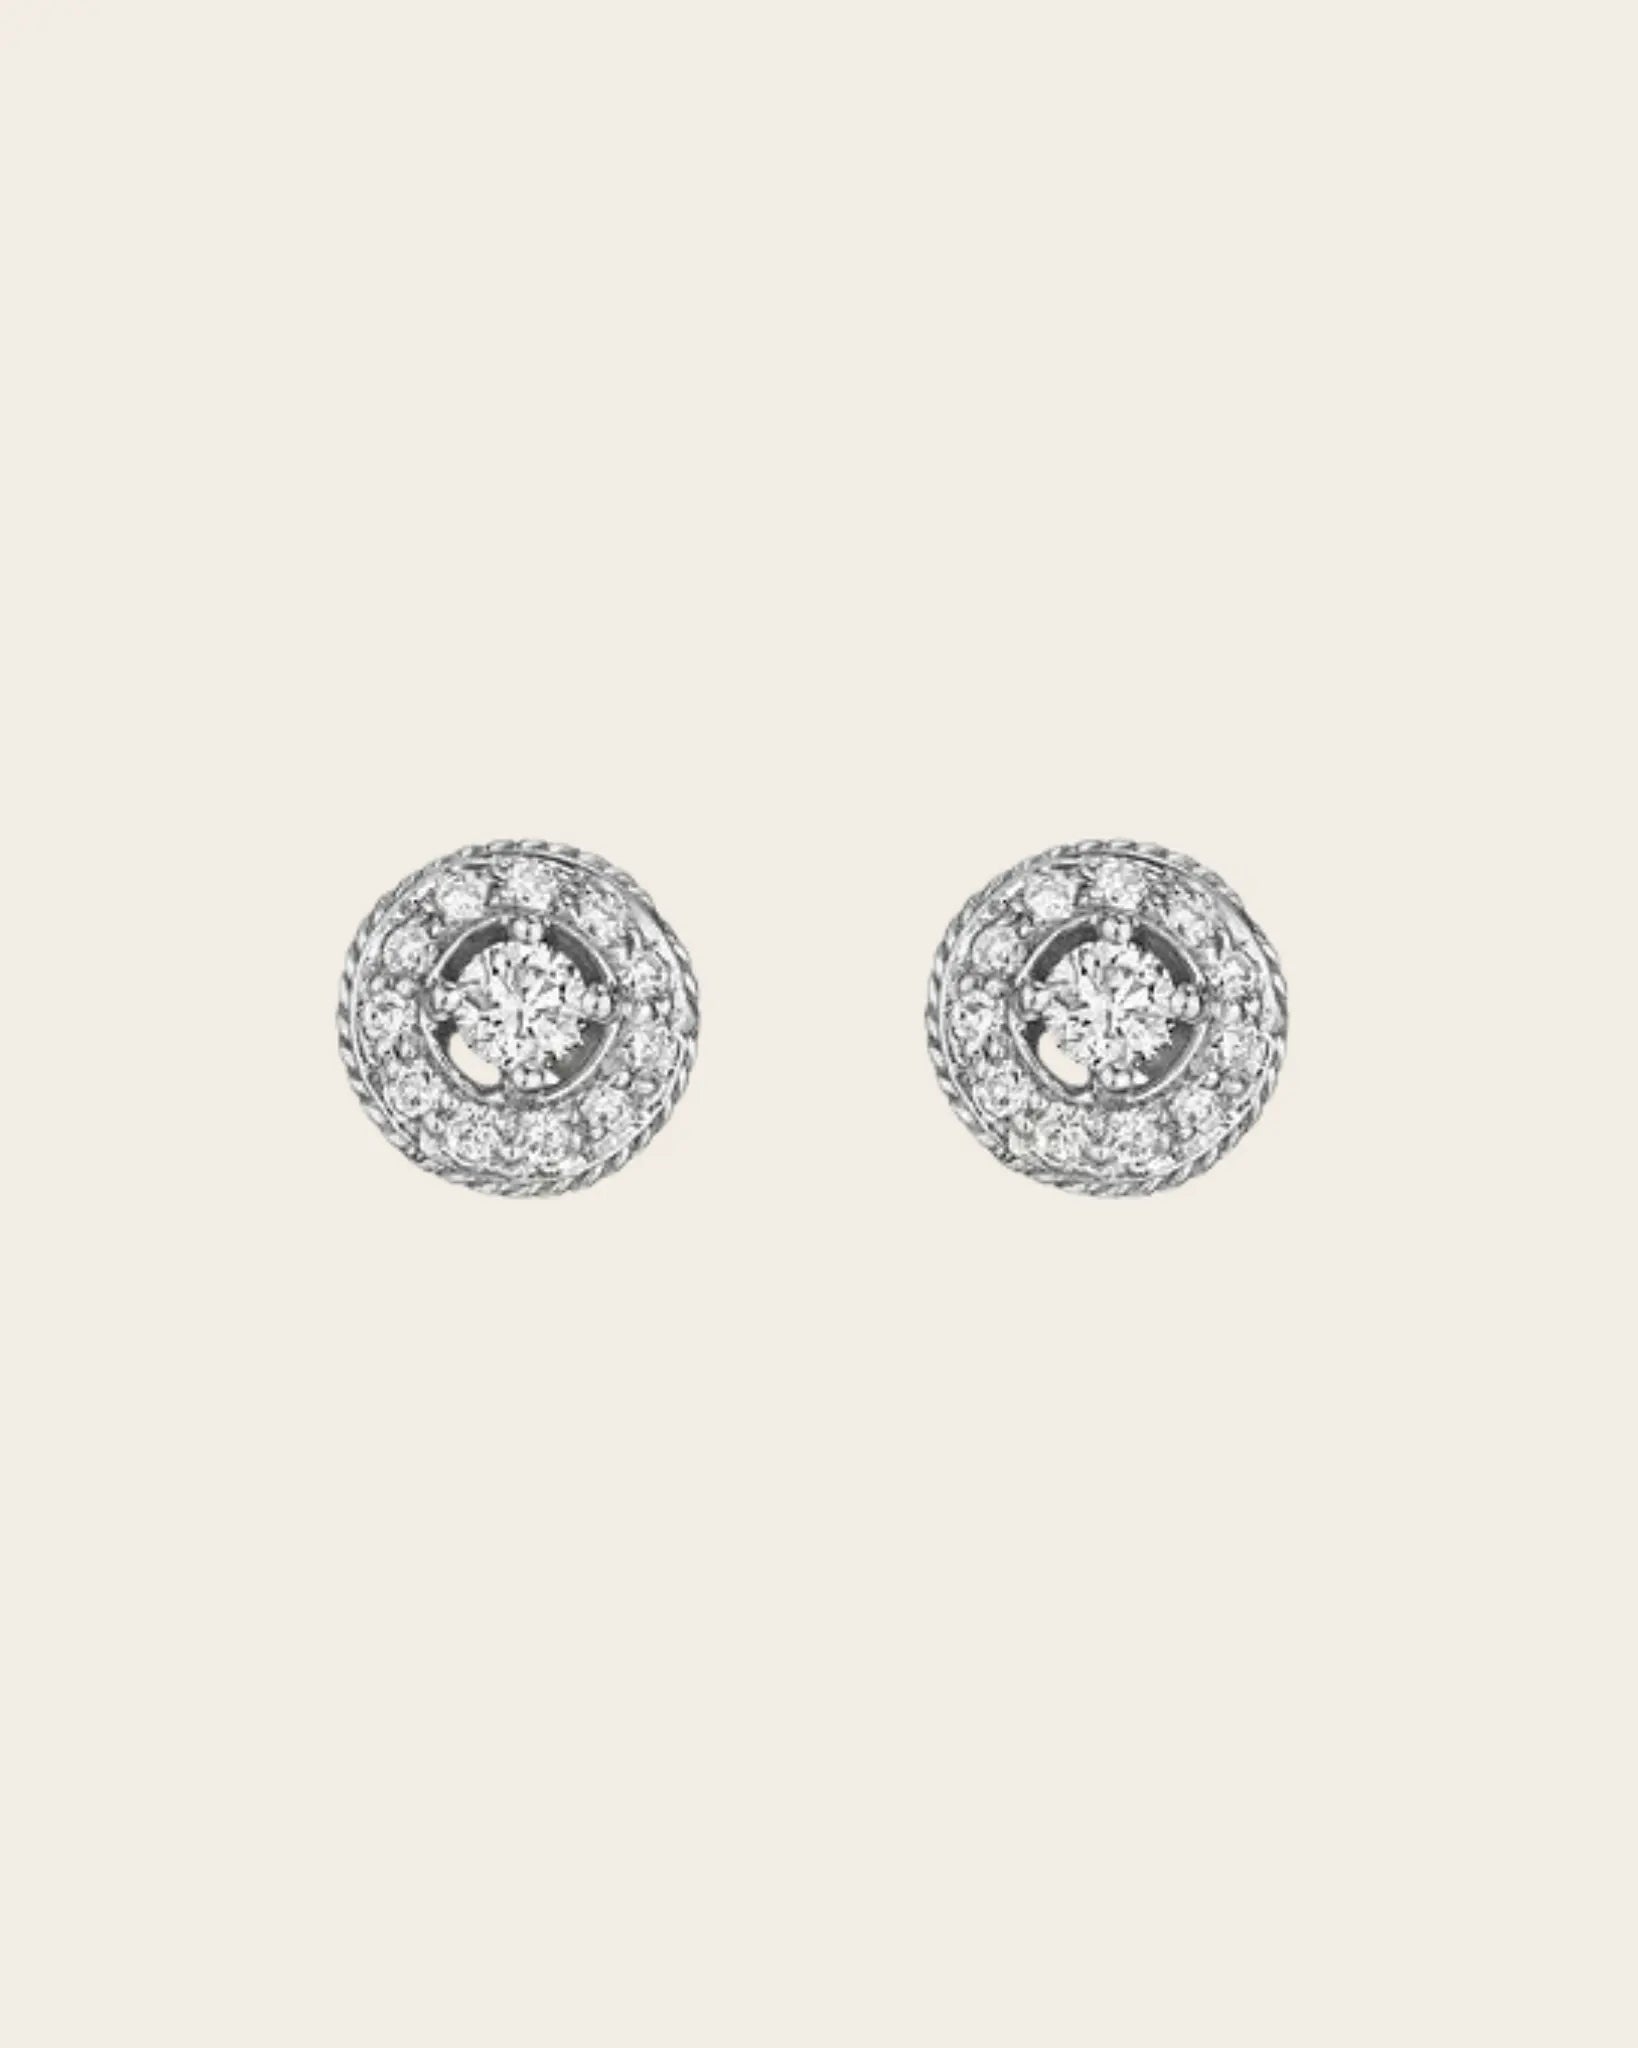 Round Engraved Diamond Stud Earrings Round Engraved Diamond Stud Earrings Penny Preville Penny Preville  Squash Blossom Vail